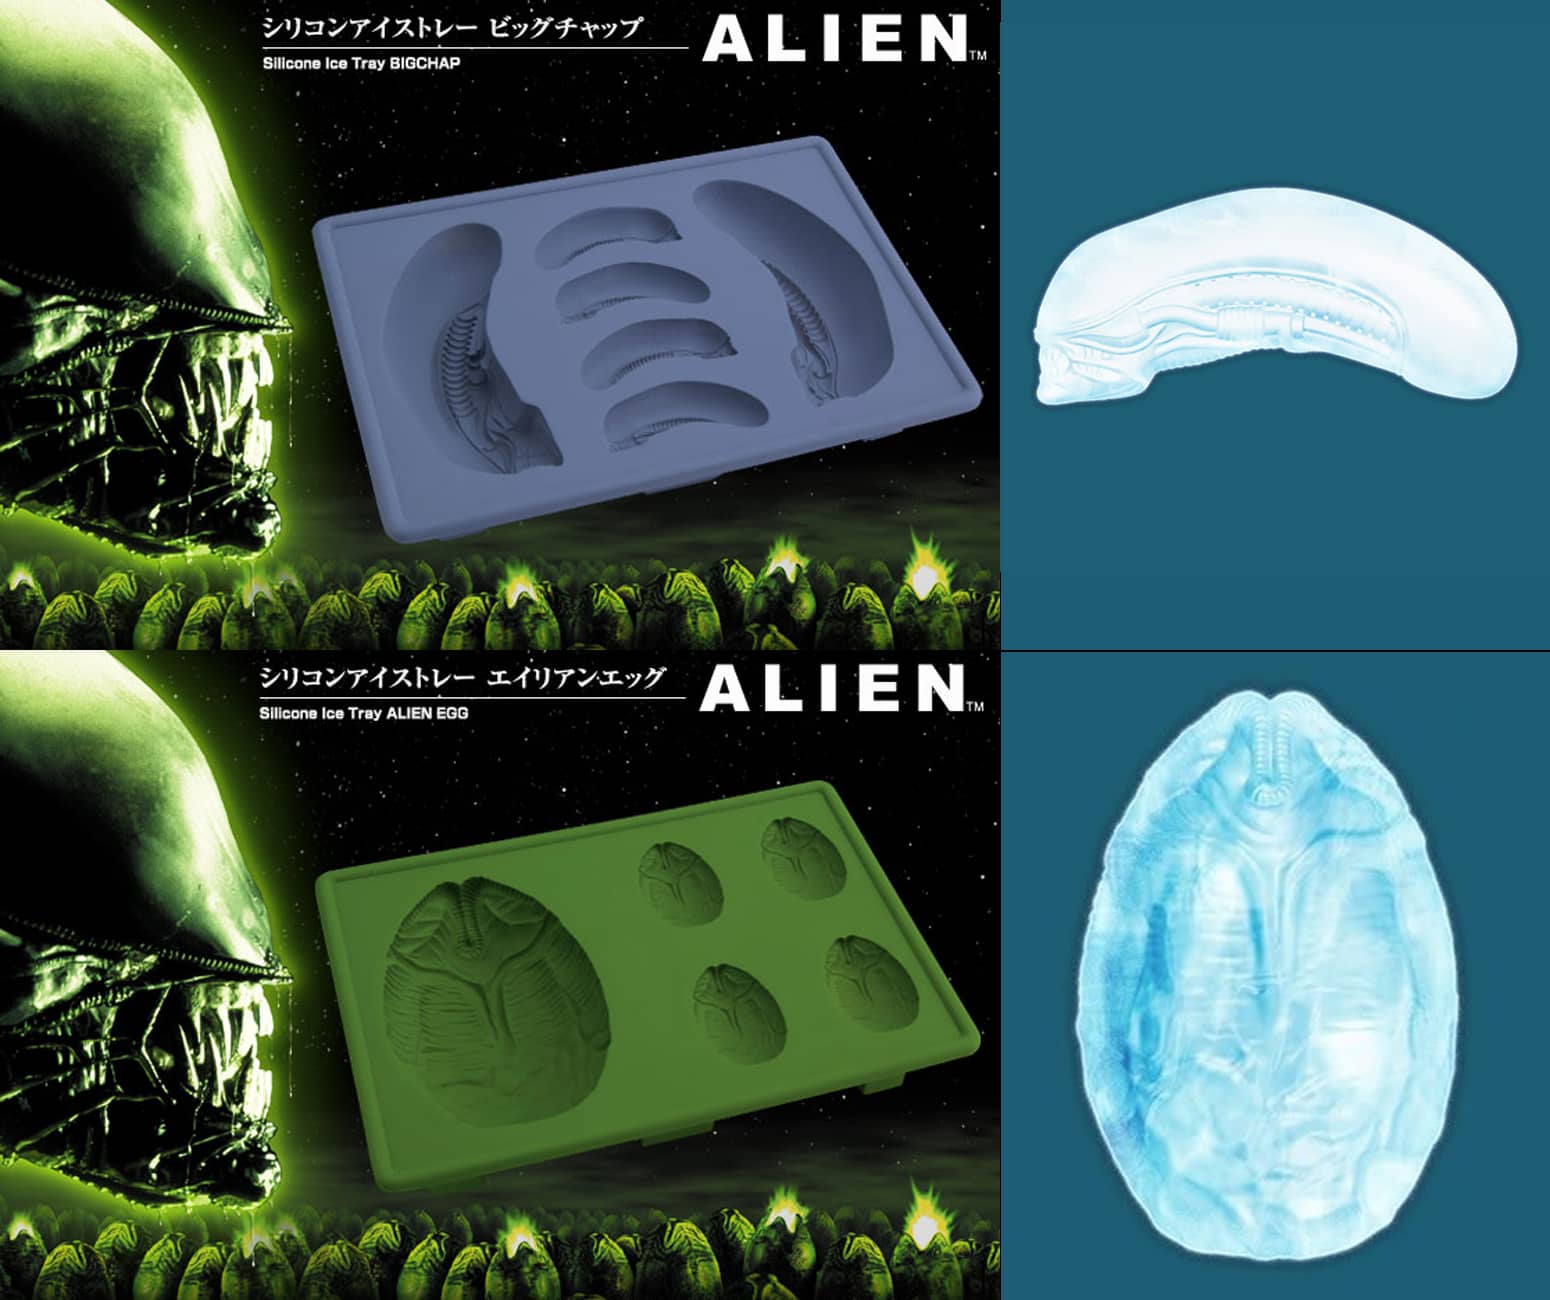 ALIEN Xenomorph Head and Egg Pod Silicone Ice Trays